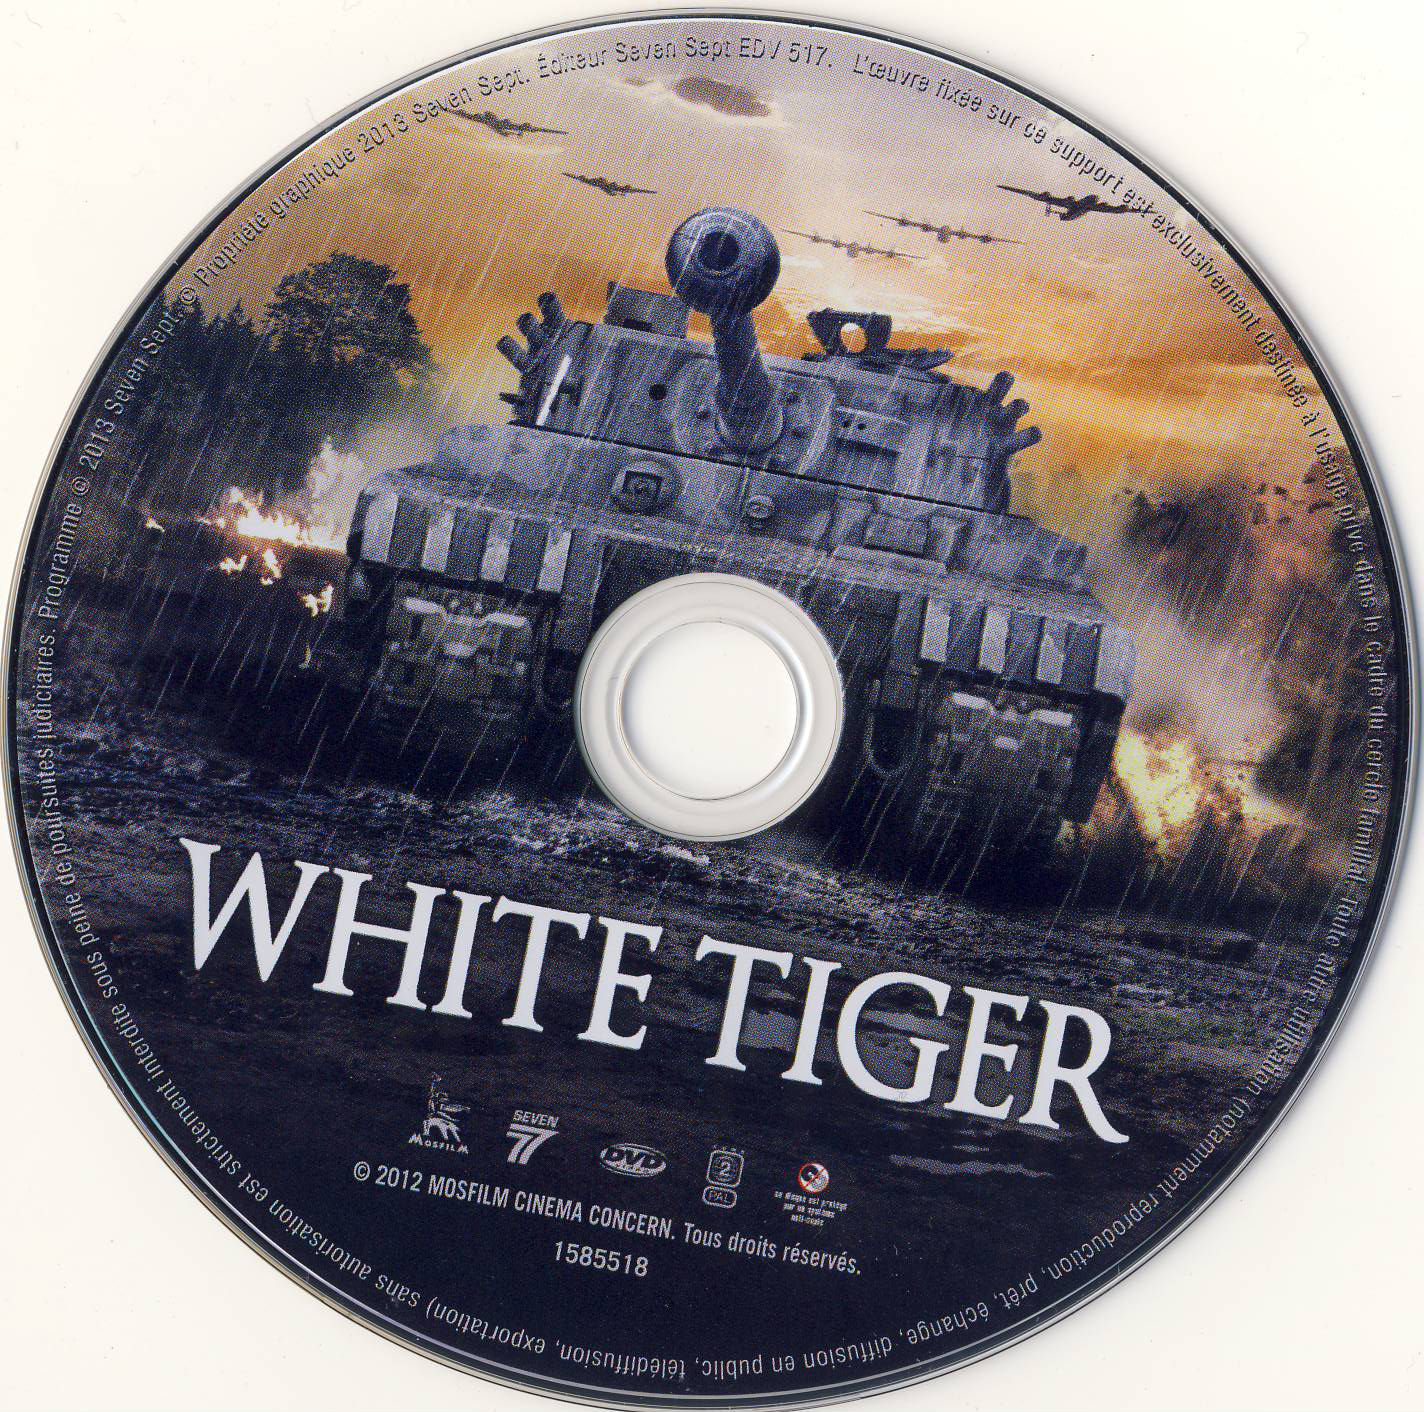 White tiger (2012)